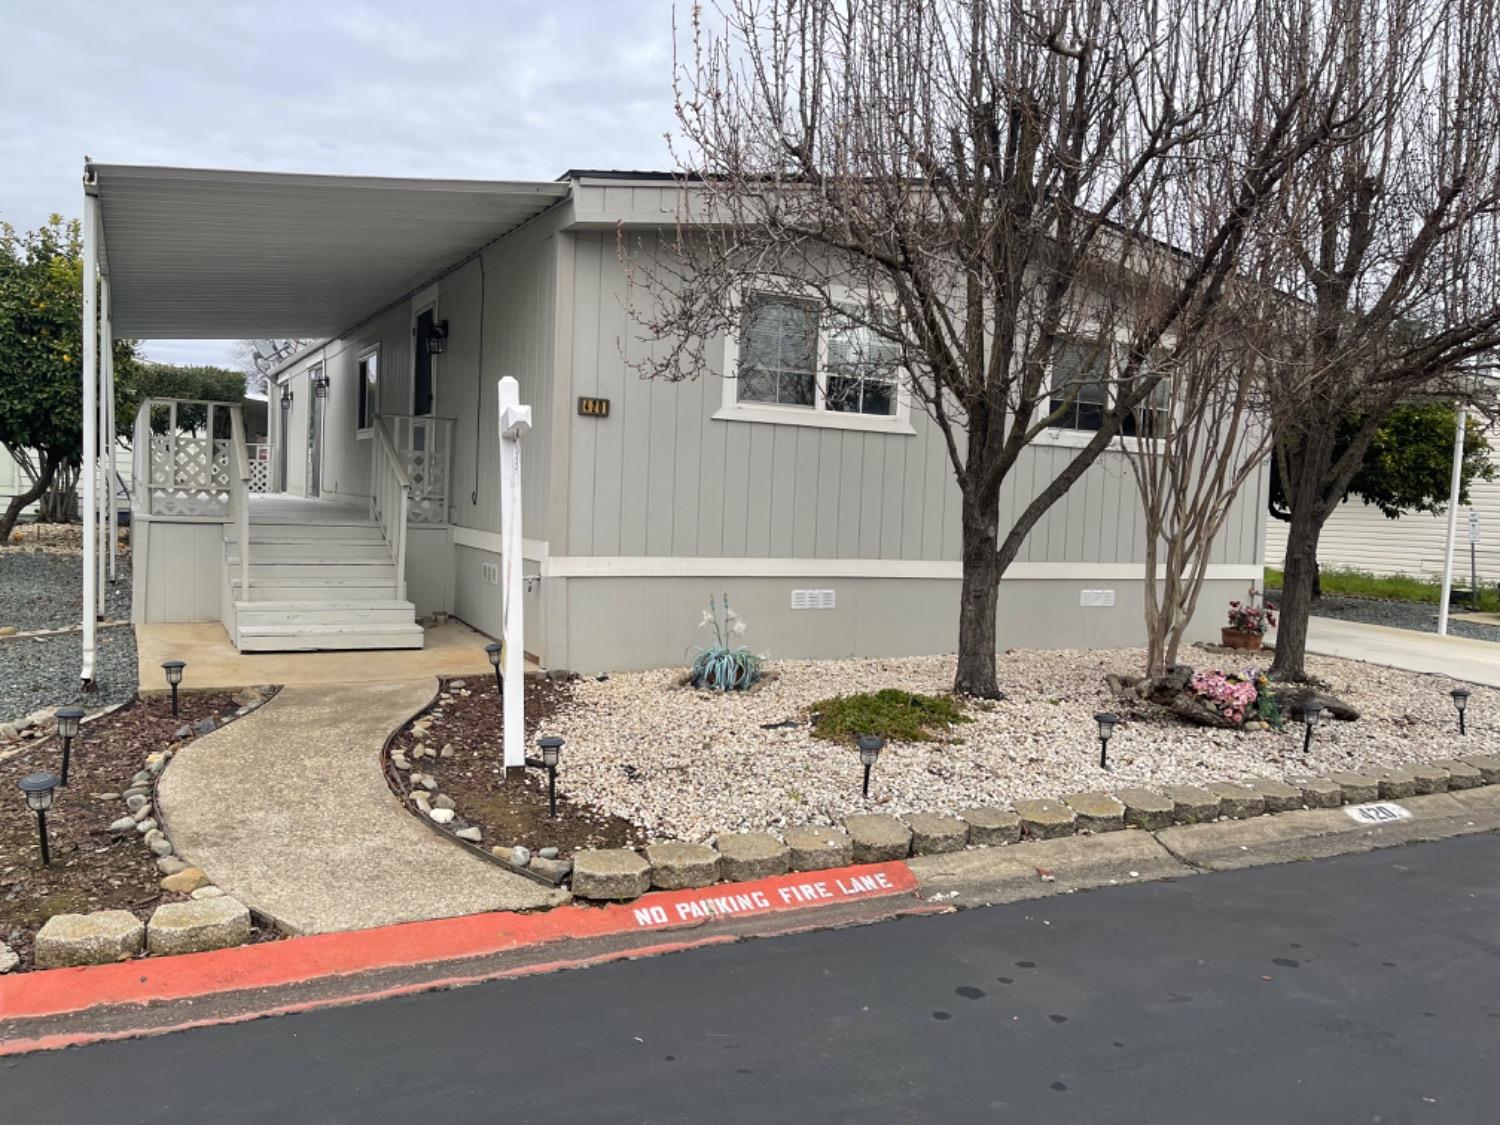 Photo of Address Not Disclosed in Rancho Cordova, CA